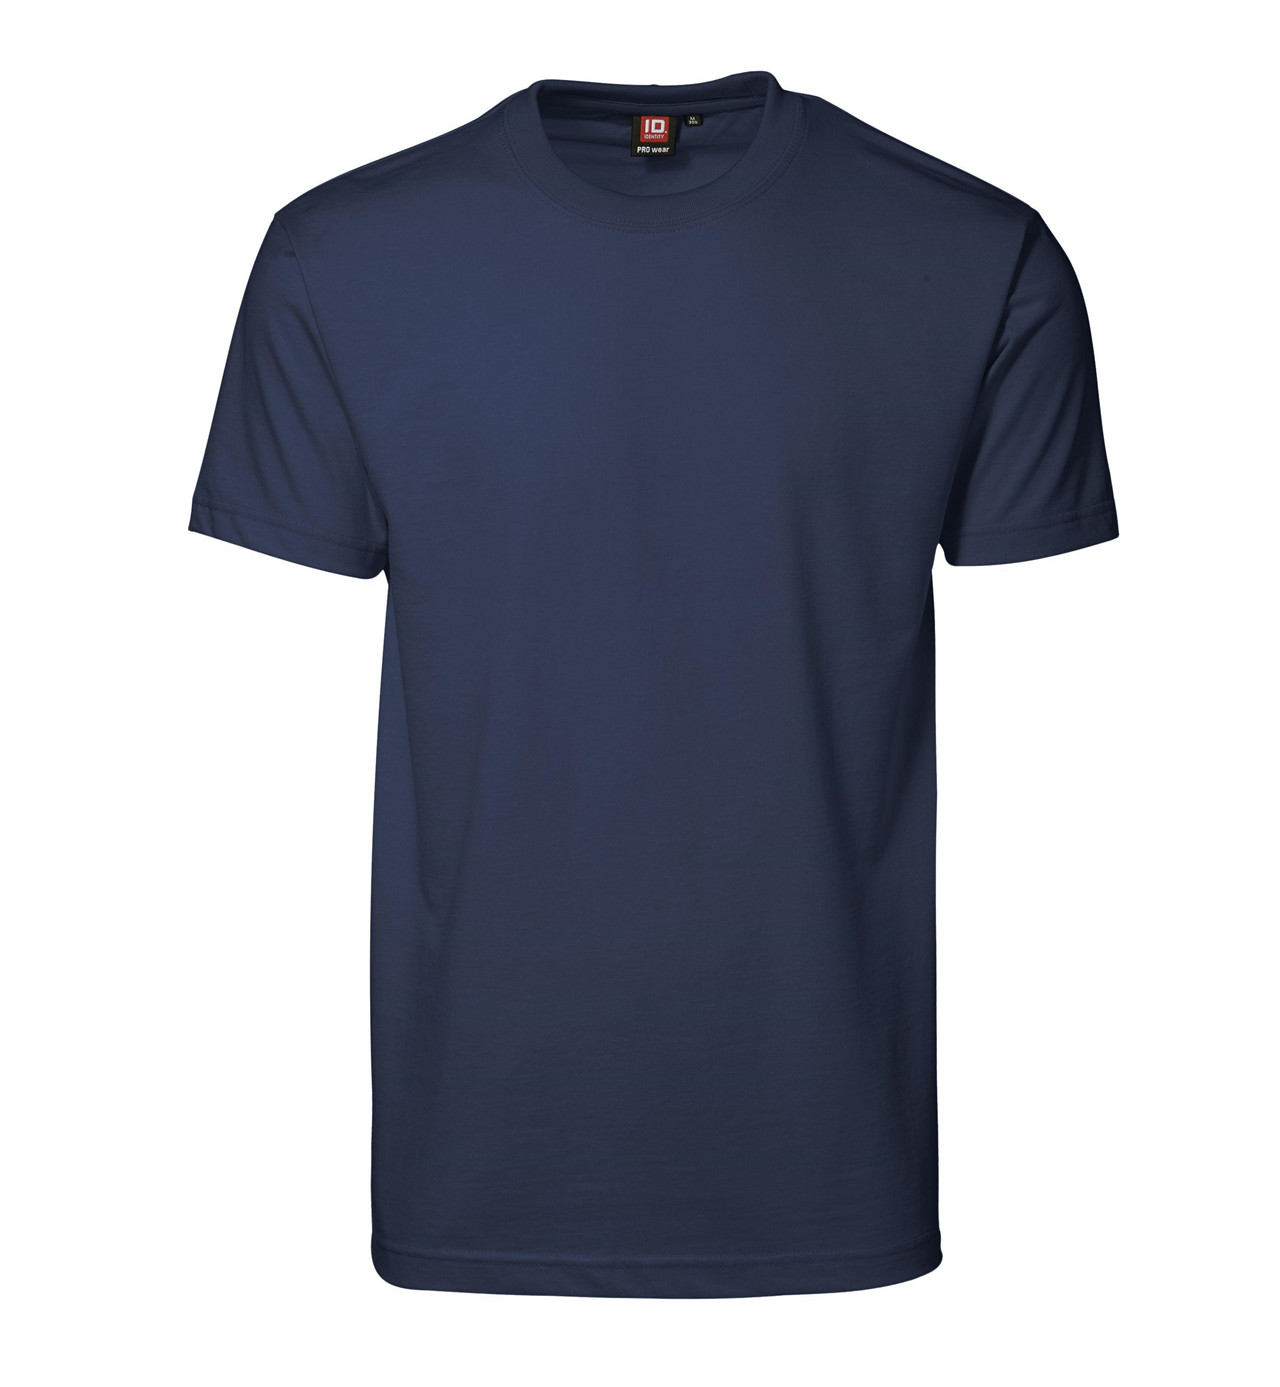 ID PRO Wear T-shirt til Herre (Navy, L)